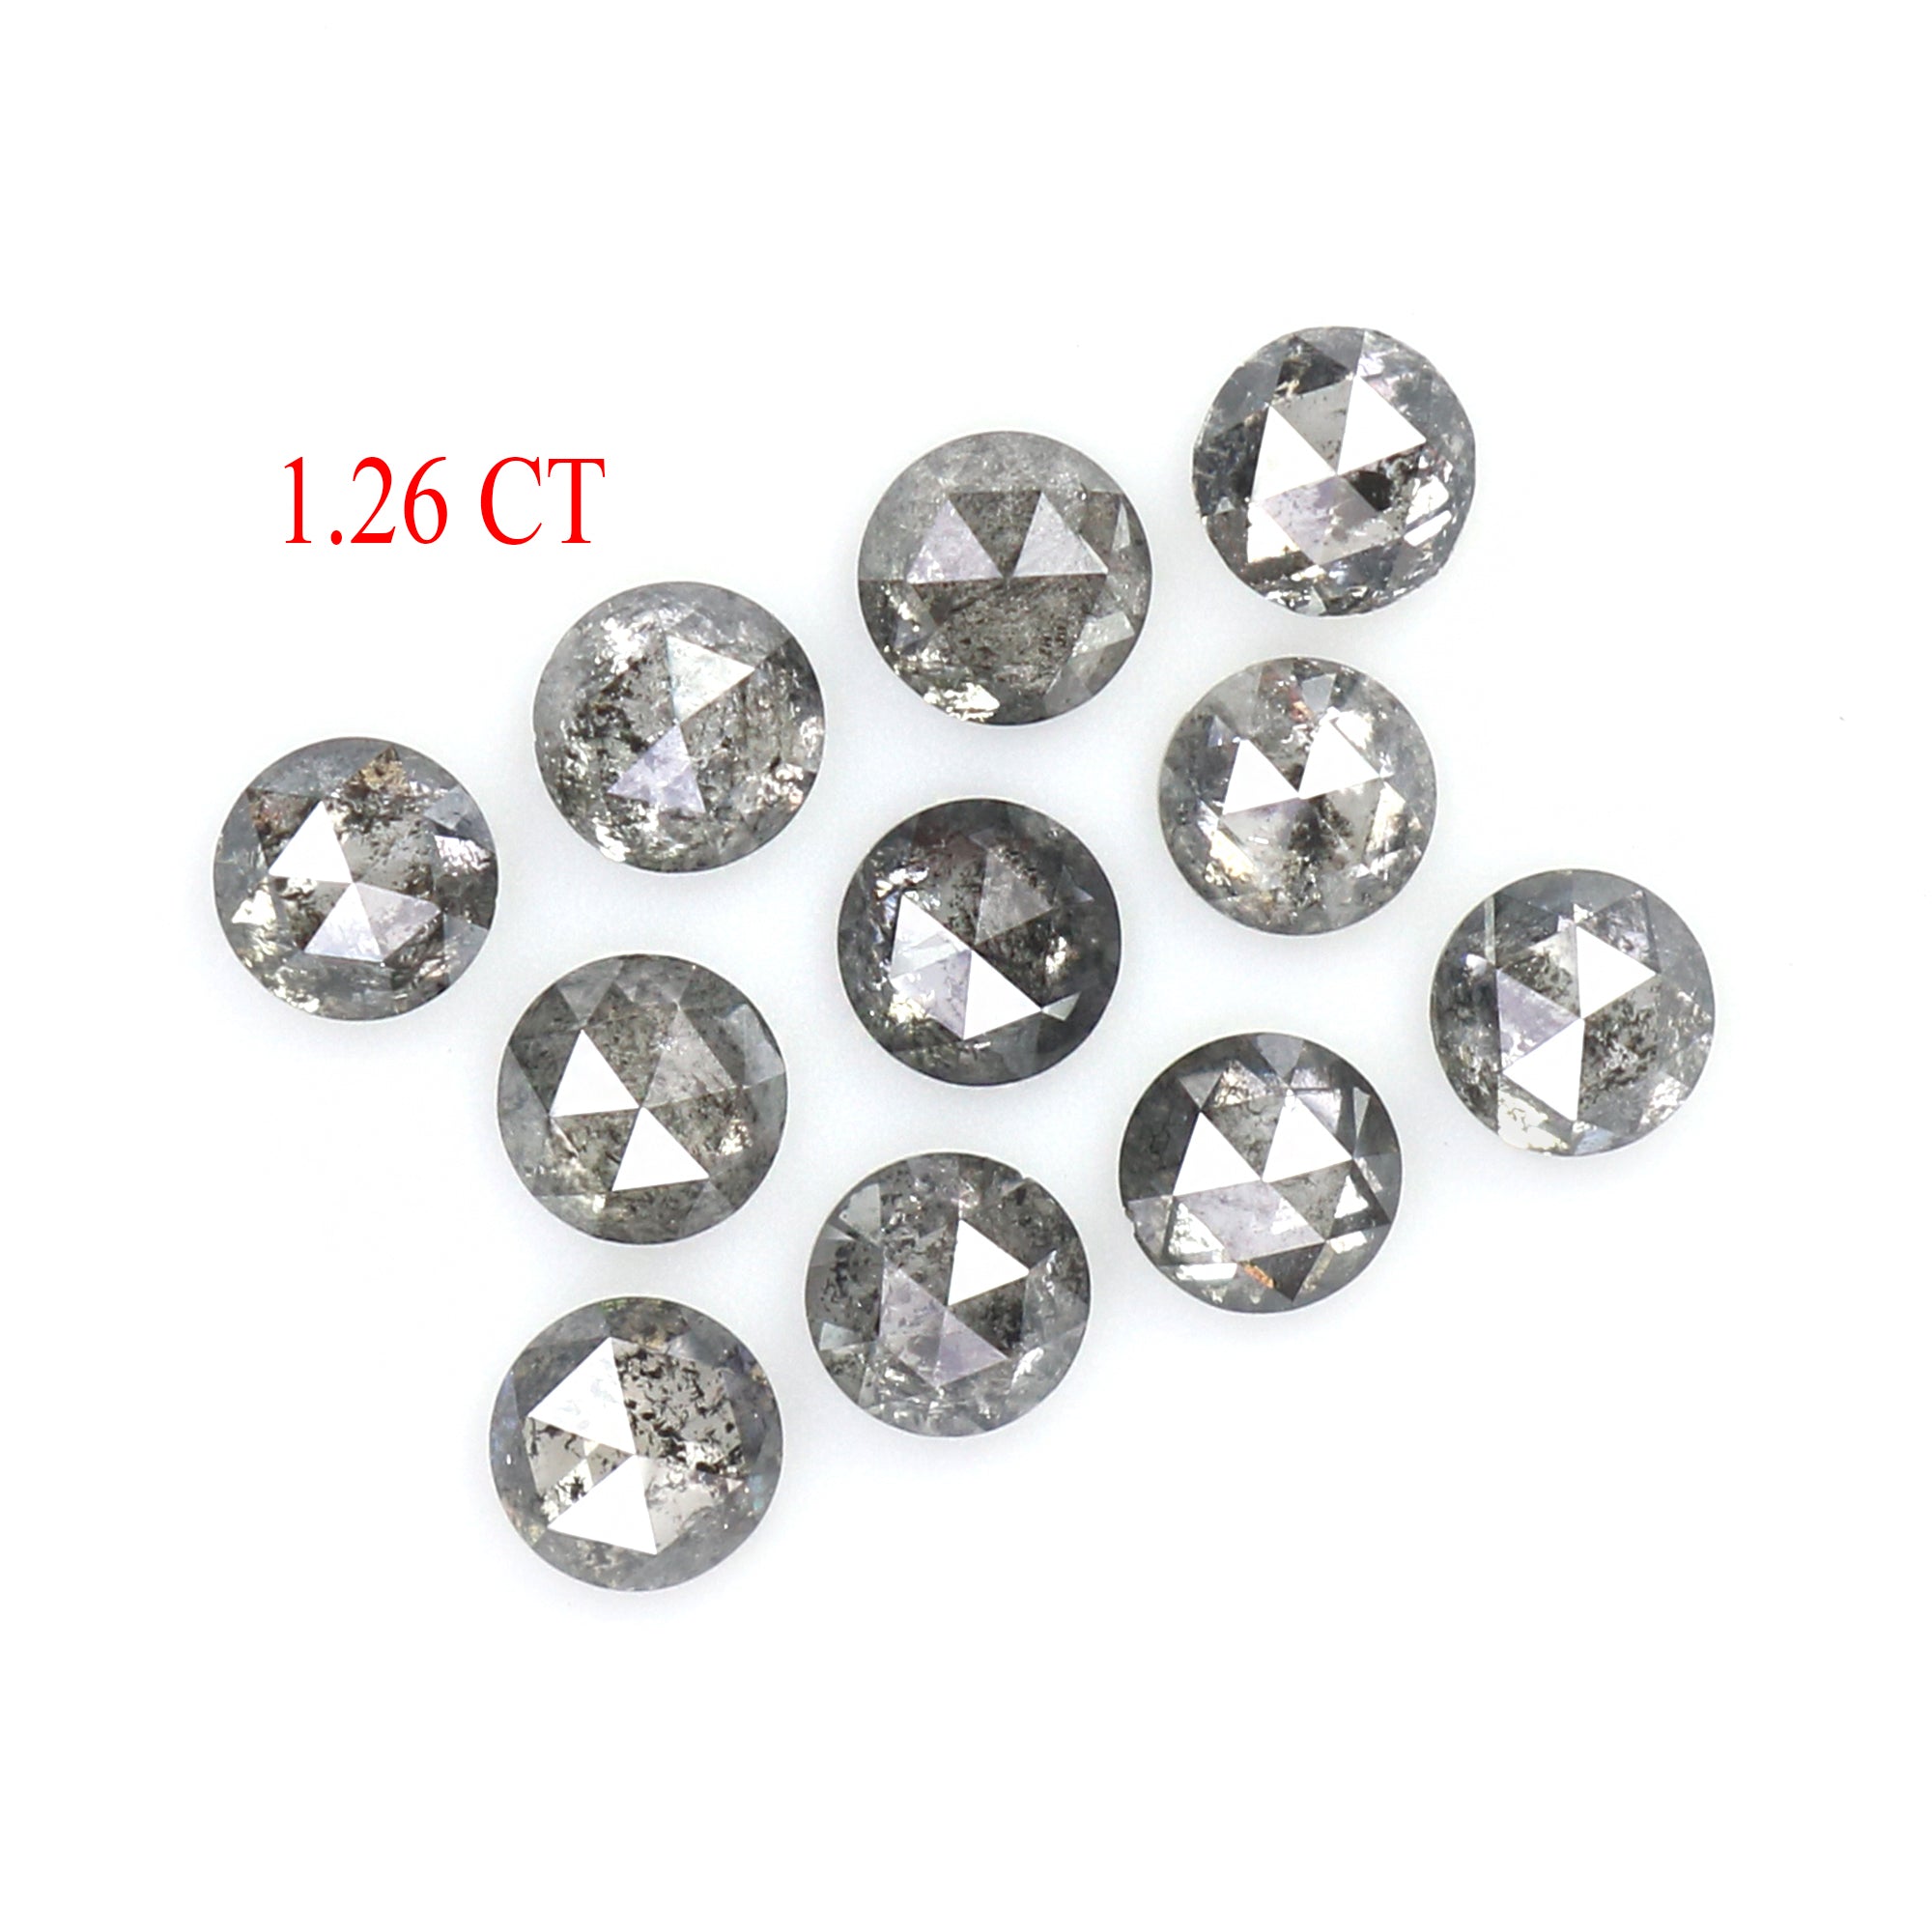 Natural Loose Round Rose Cut Diamond, Salt And Pepper Round Diamond, Natural Loose Diamond, Rose Cut Diamond, 1.26 CT Round Shape L2775